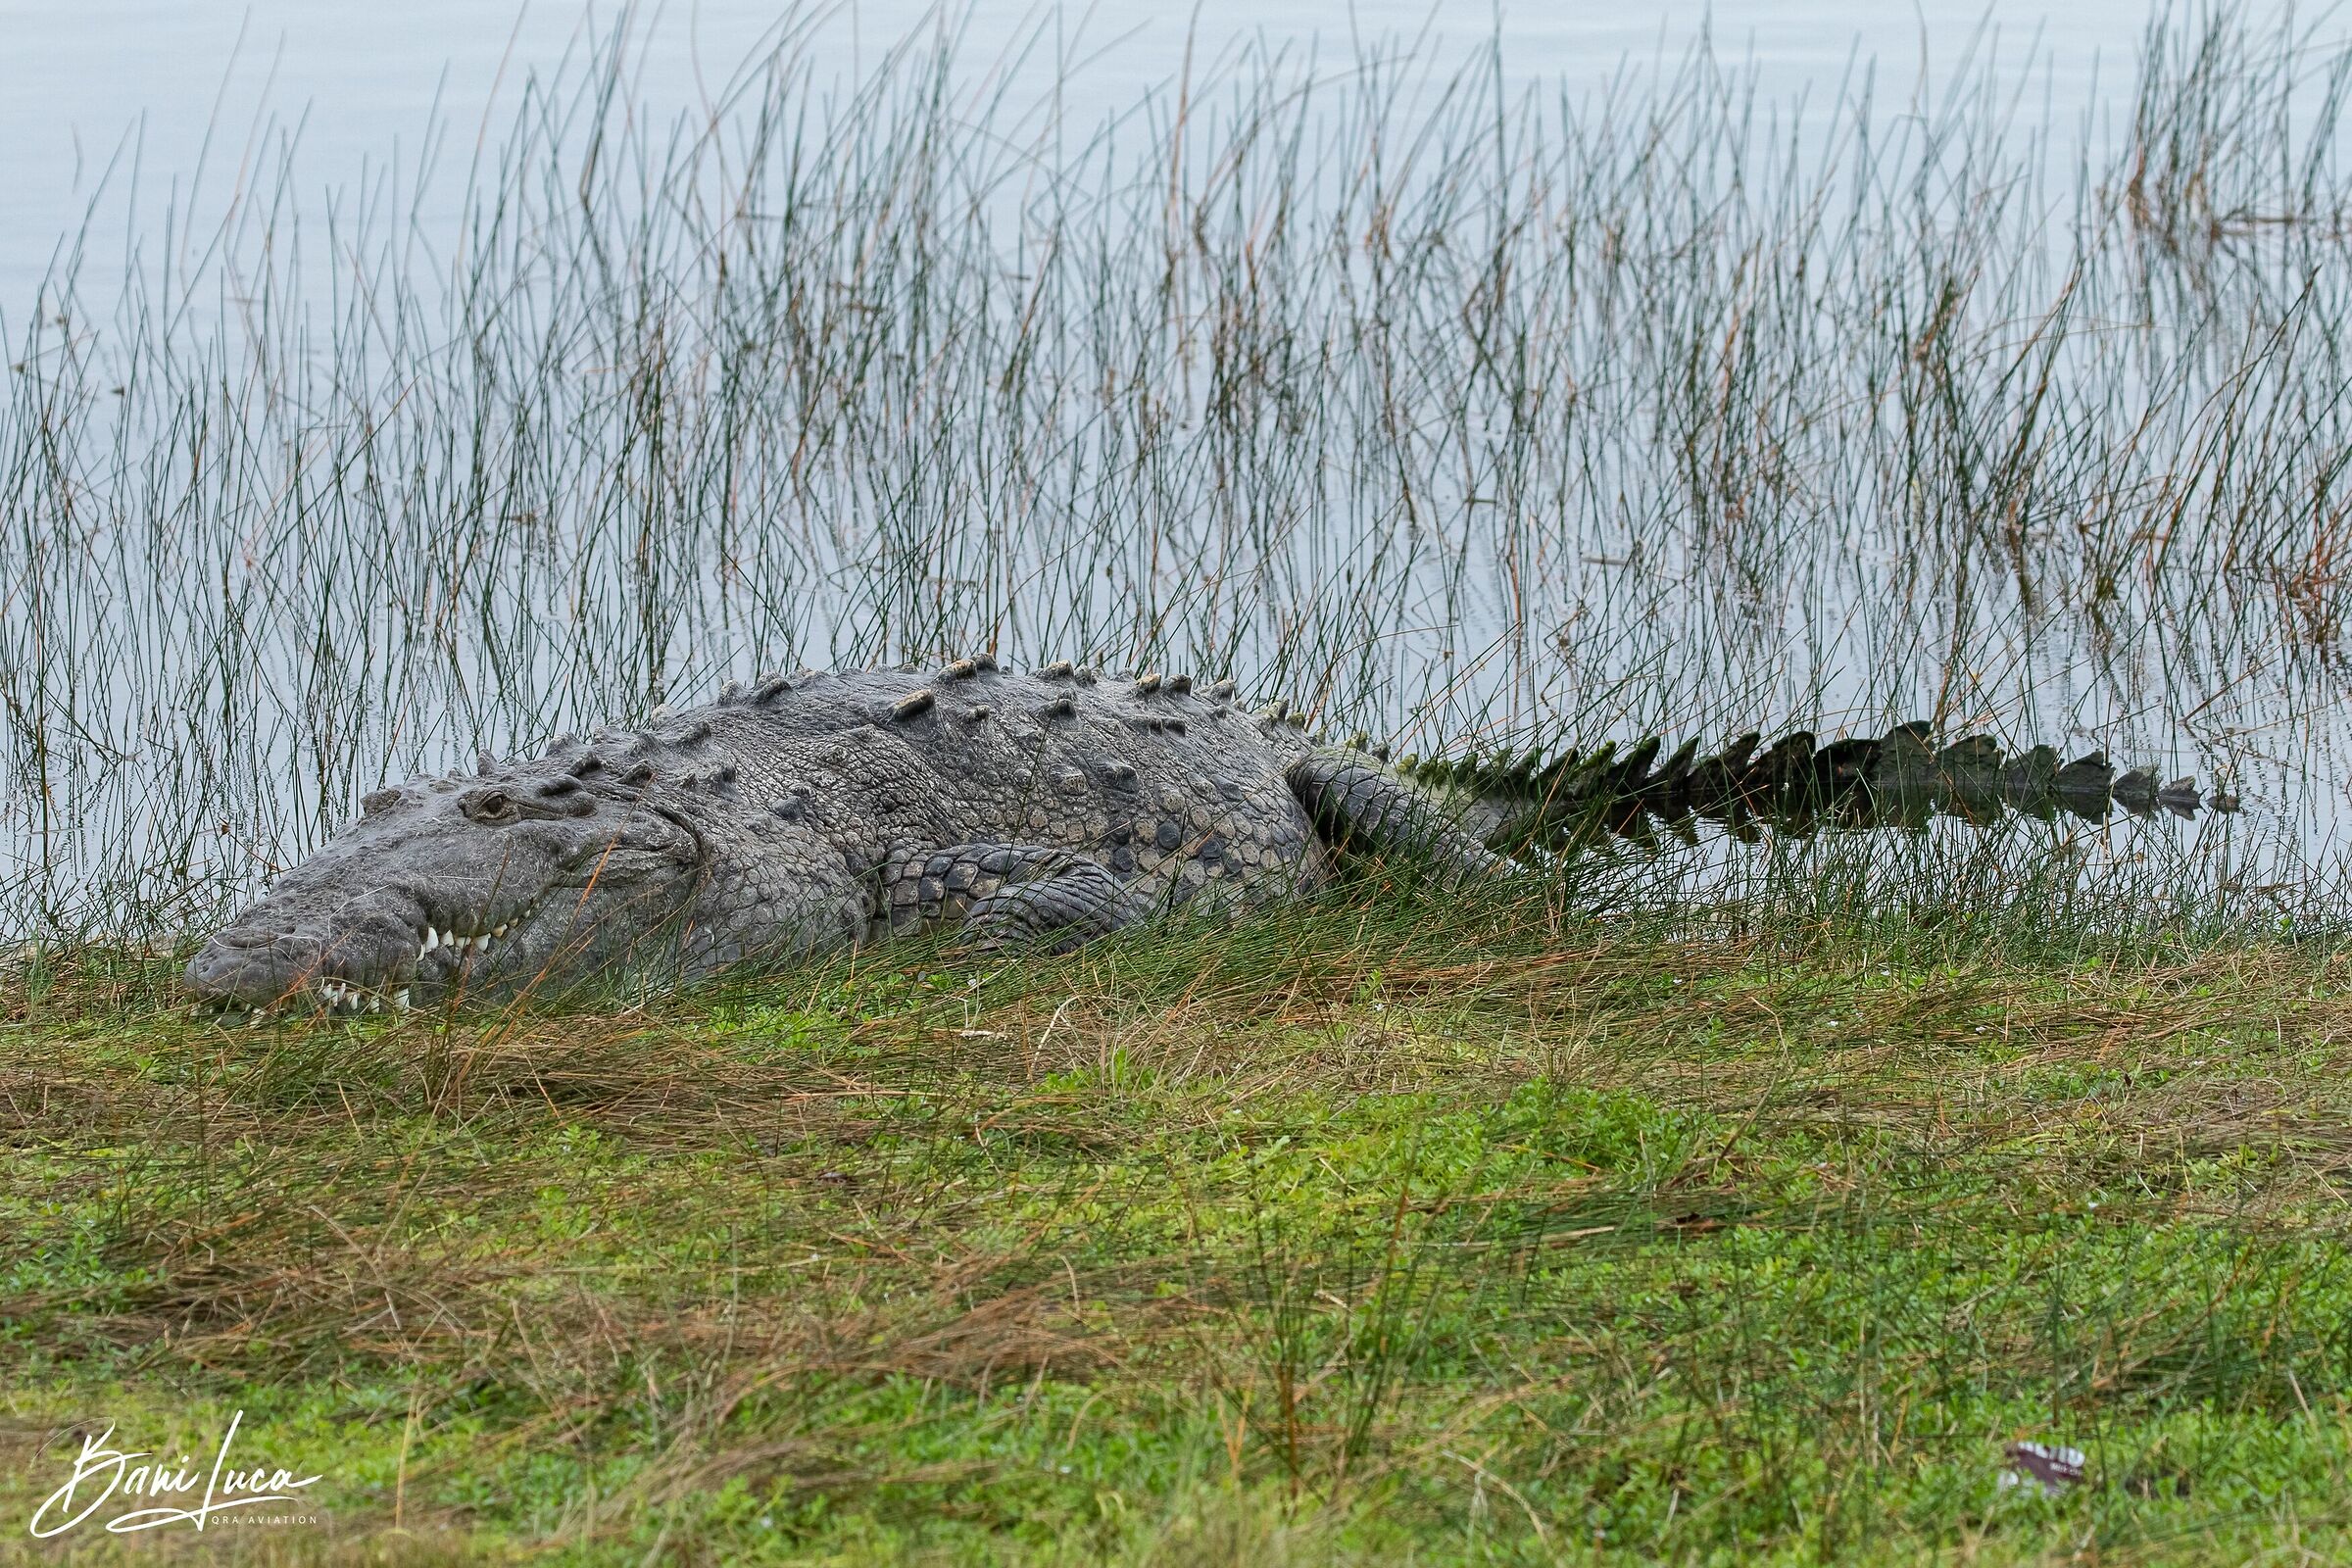 American Crocodile...